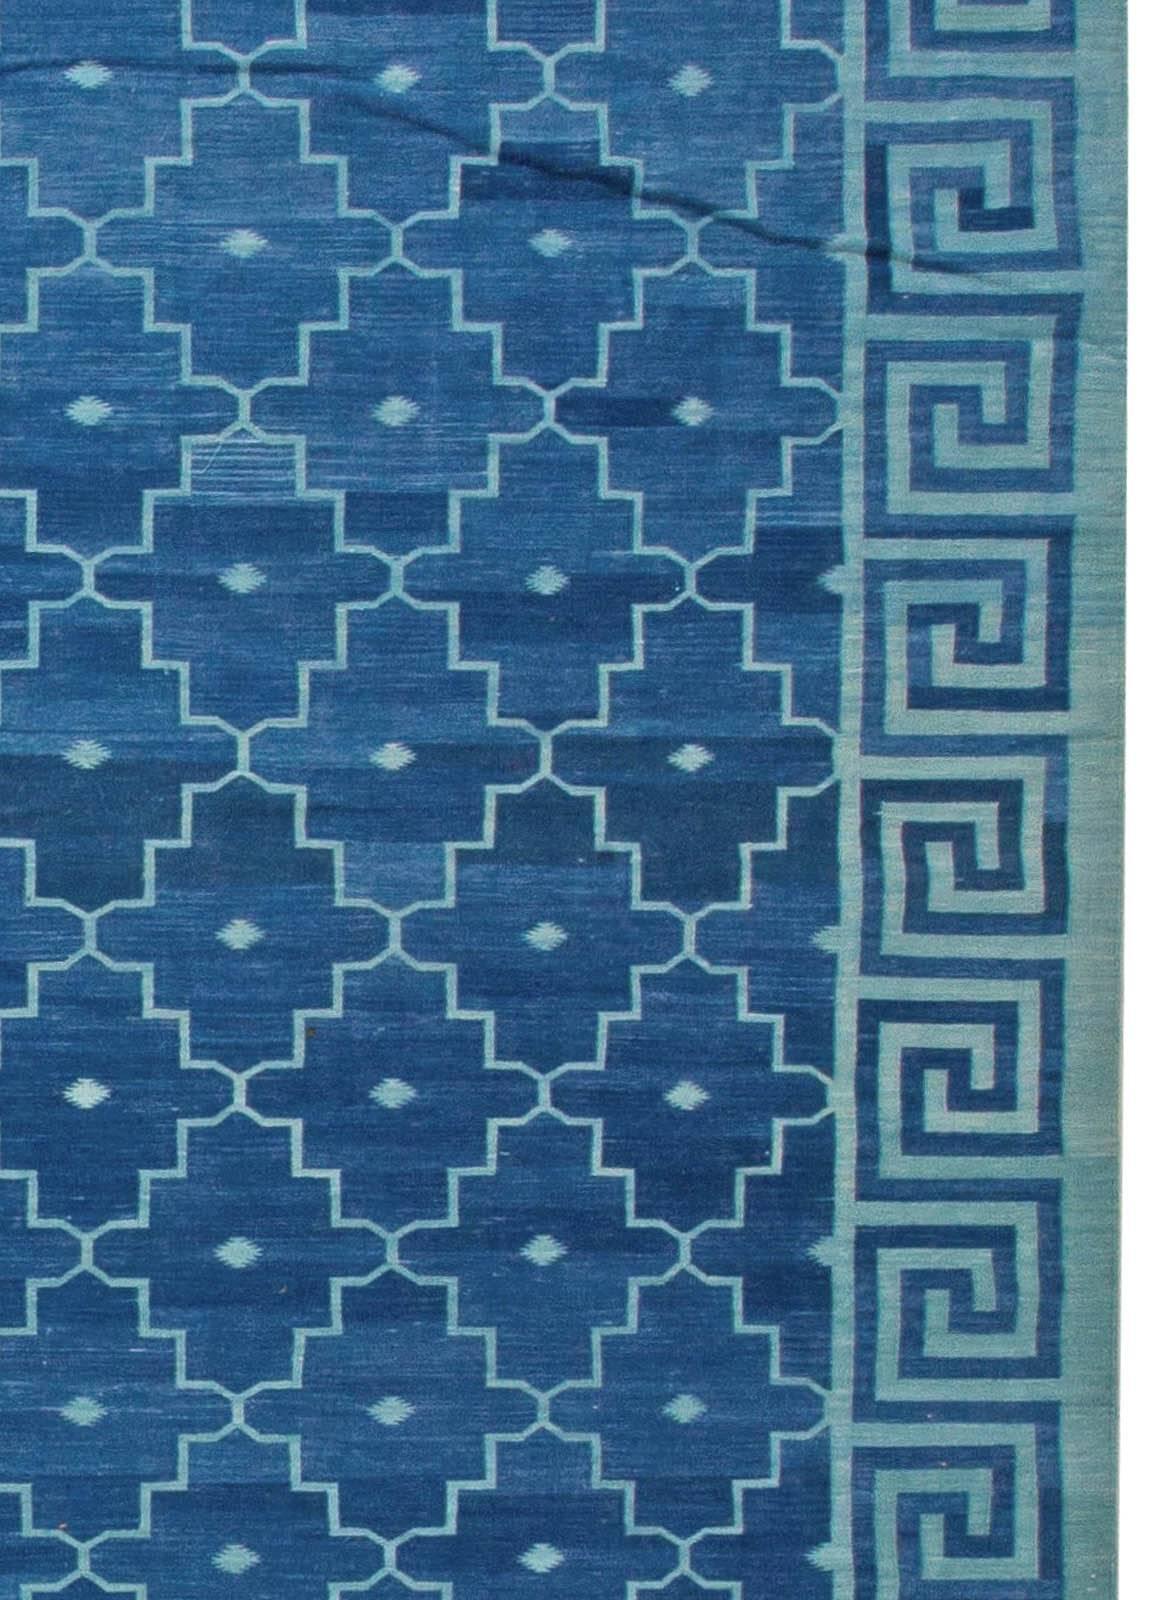 Cotton Contemporary Indian Dhurrie Blue Flat-Weave Rug by Doris Leslie Blau For Sale